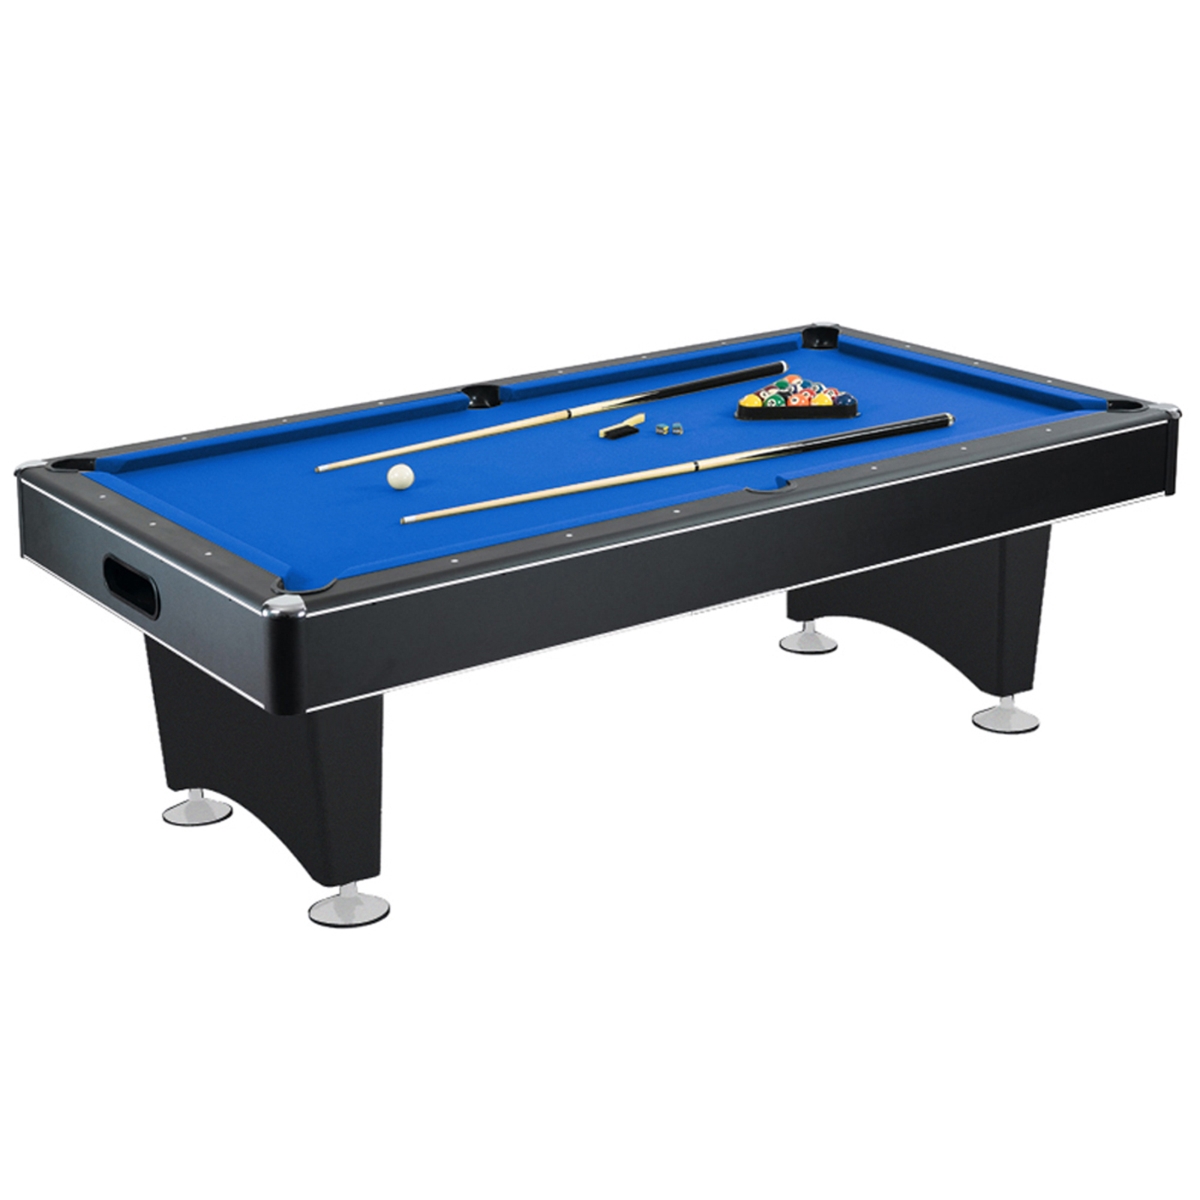 Ng2515pb 7 Ft. Hustler Pool Table, Blue